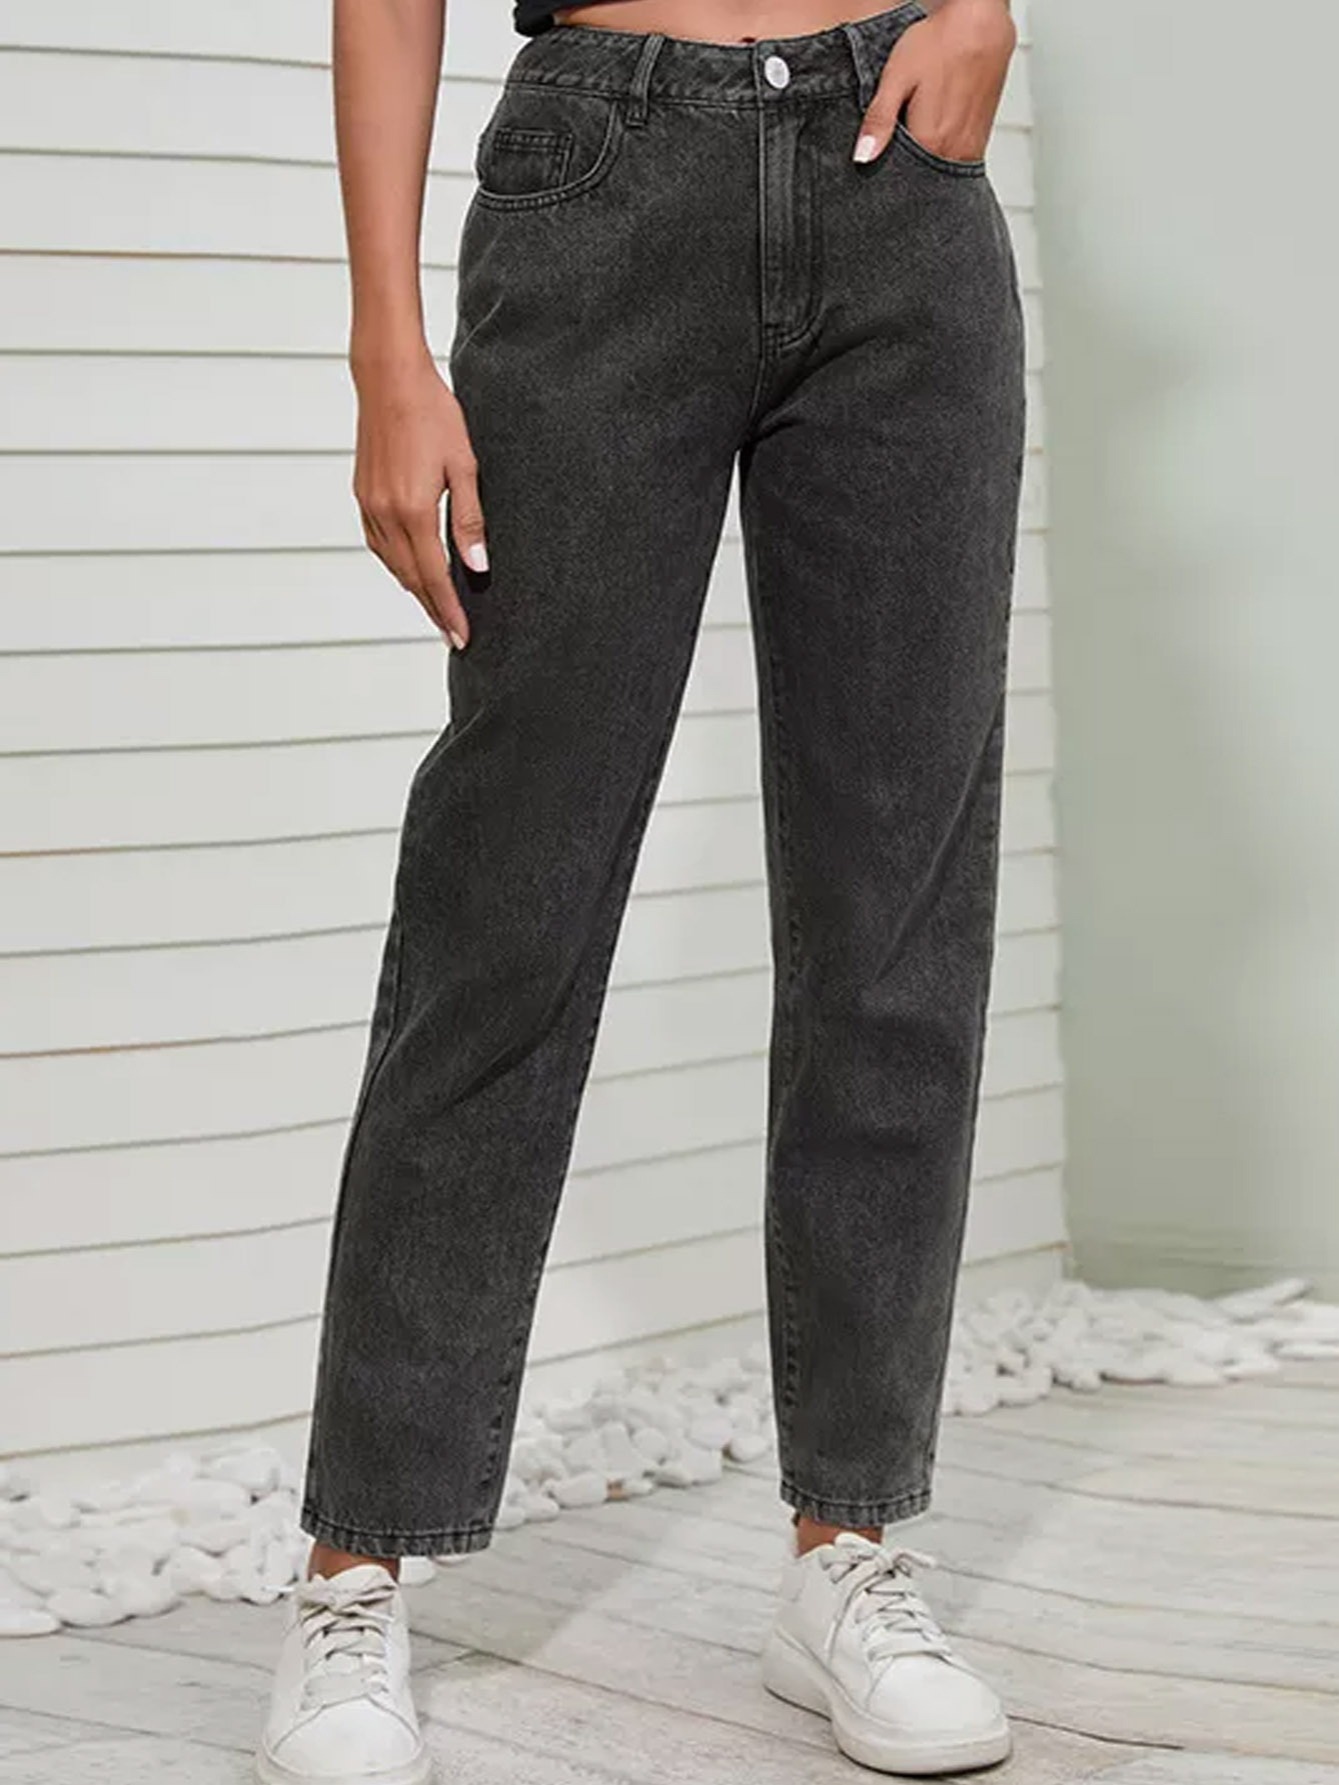 Pantalones de mezclilla negros lavados clásicos, pantalones de mezclilla de  tiro alto con bolsillos oblicuos de cintura alta, jeans y ropa de mezclill